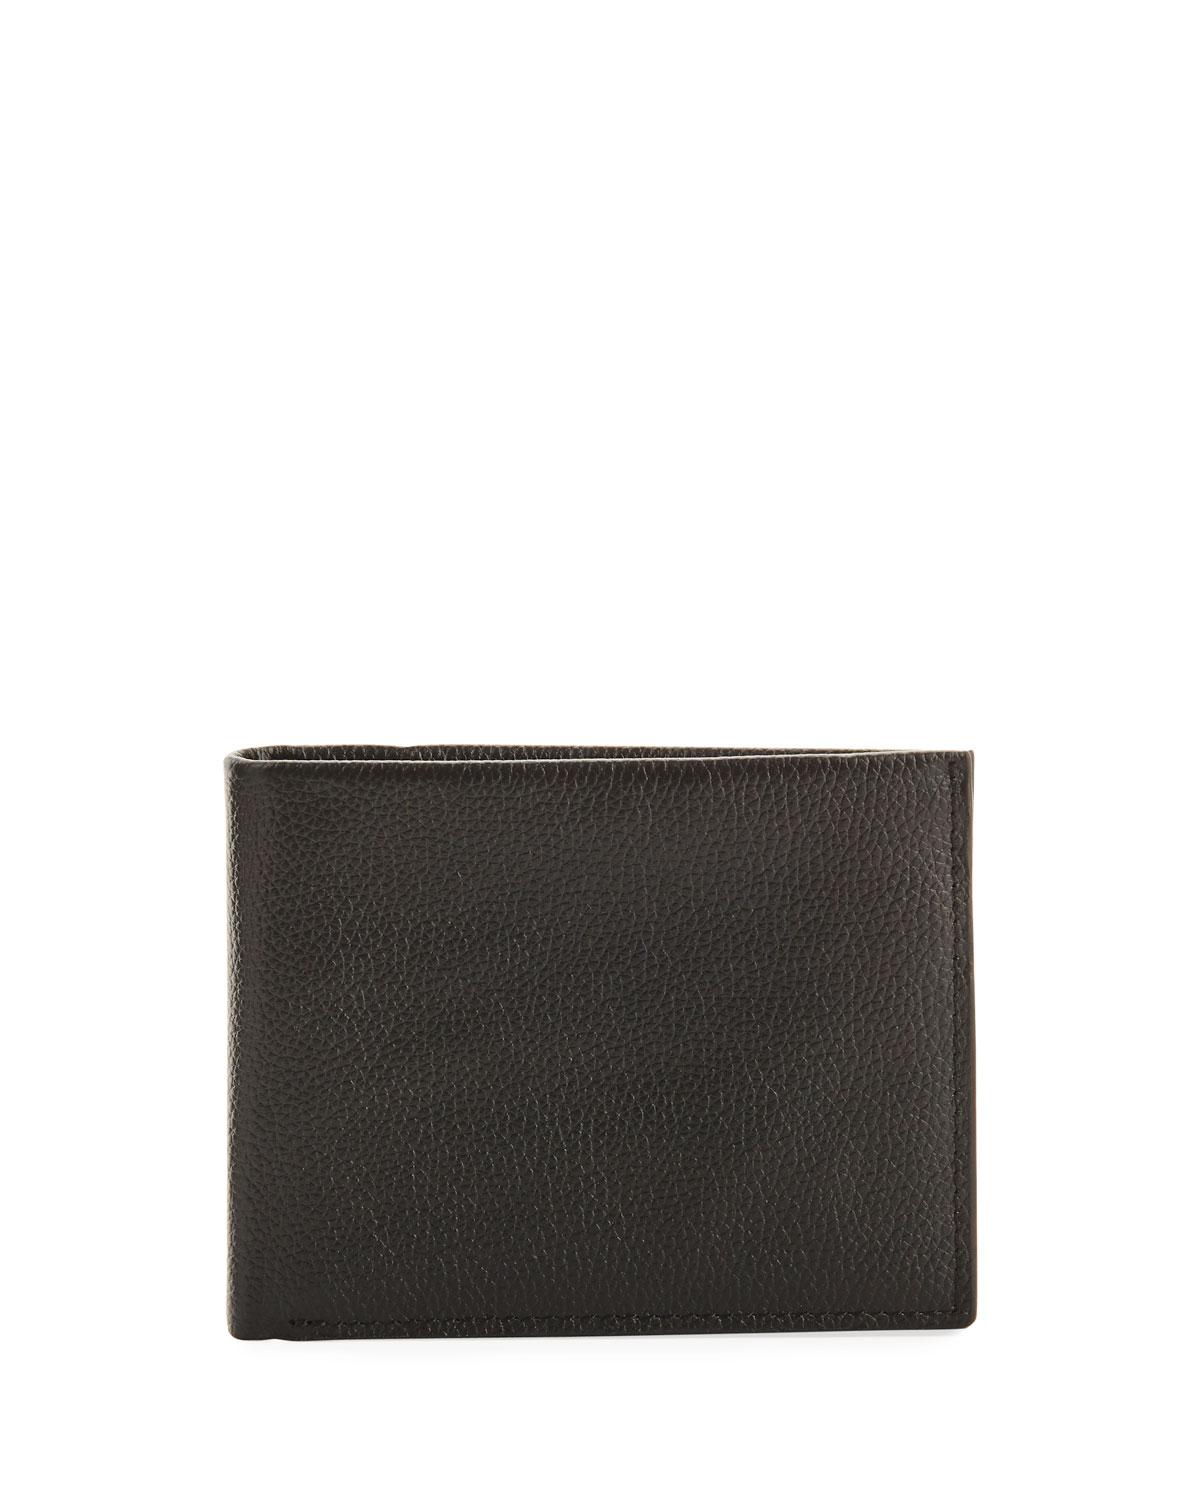 Neiman Marcus Rfid Pebbled Leather Bi-fold Wallet in Black for Men - Lyst